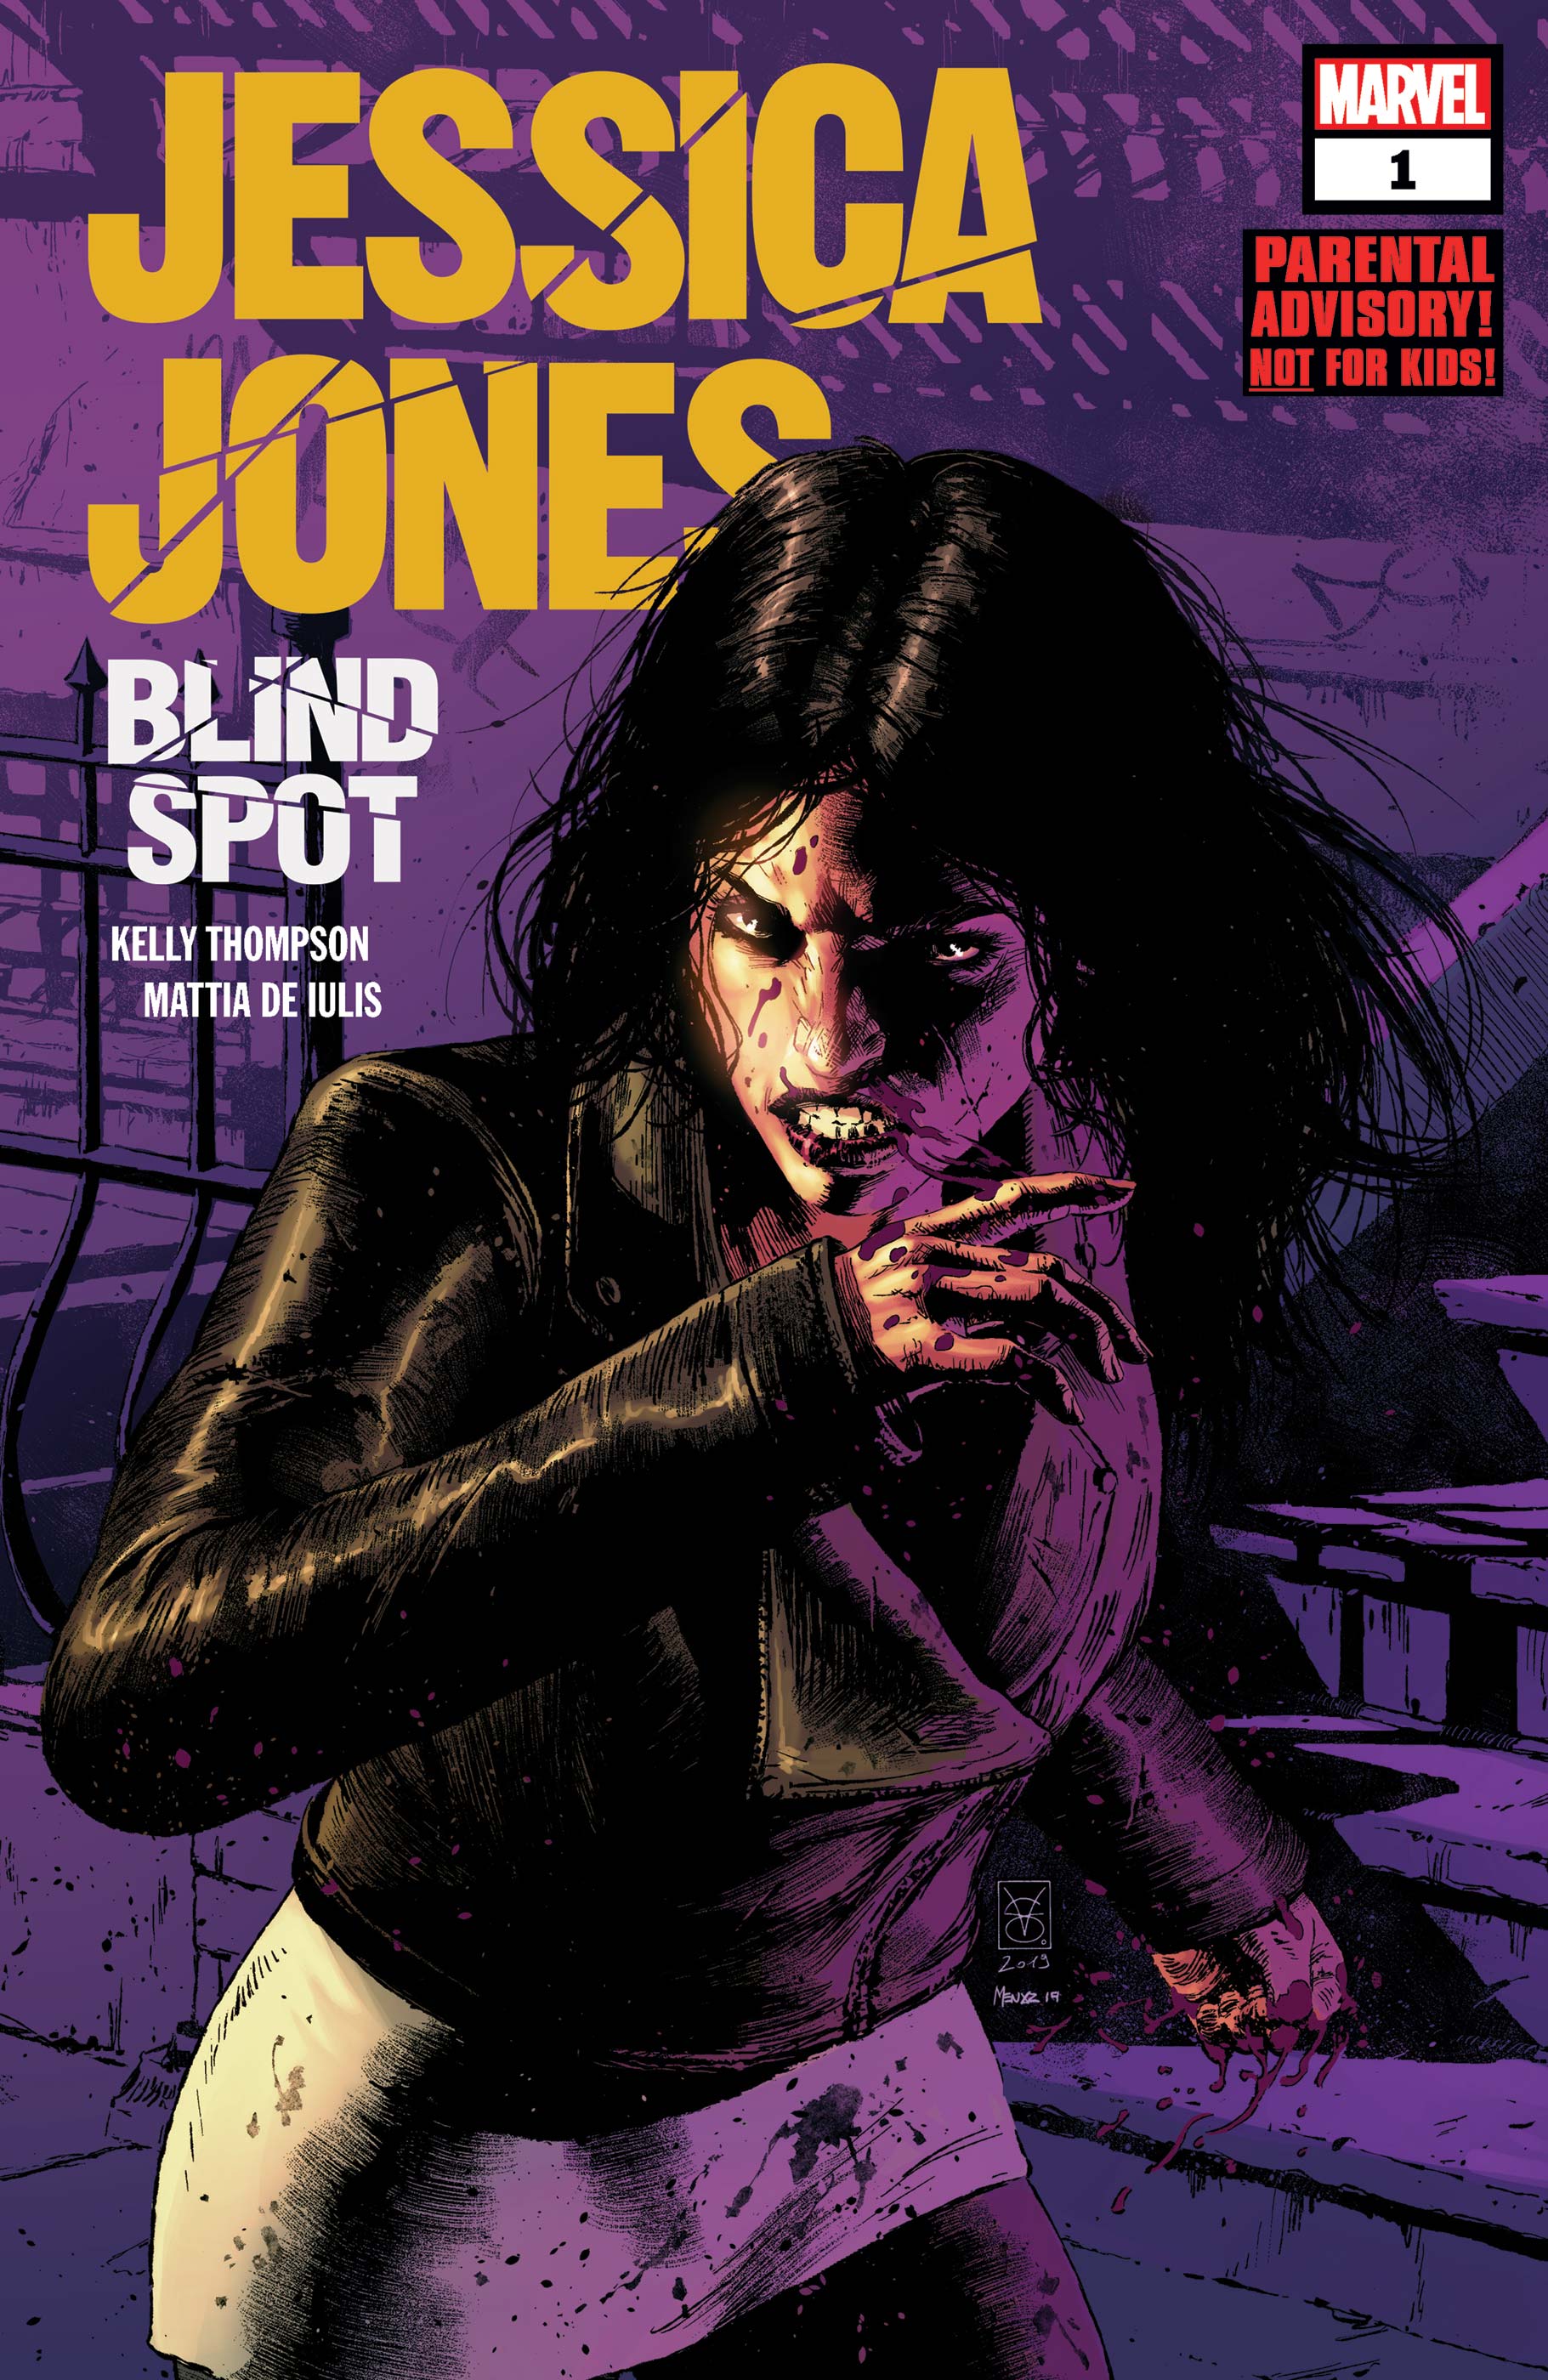 Marvel CA-01 OF 6 JESSICA JONES BLIND SPOT #2 